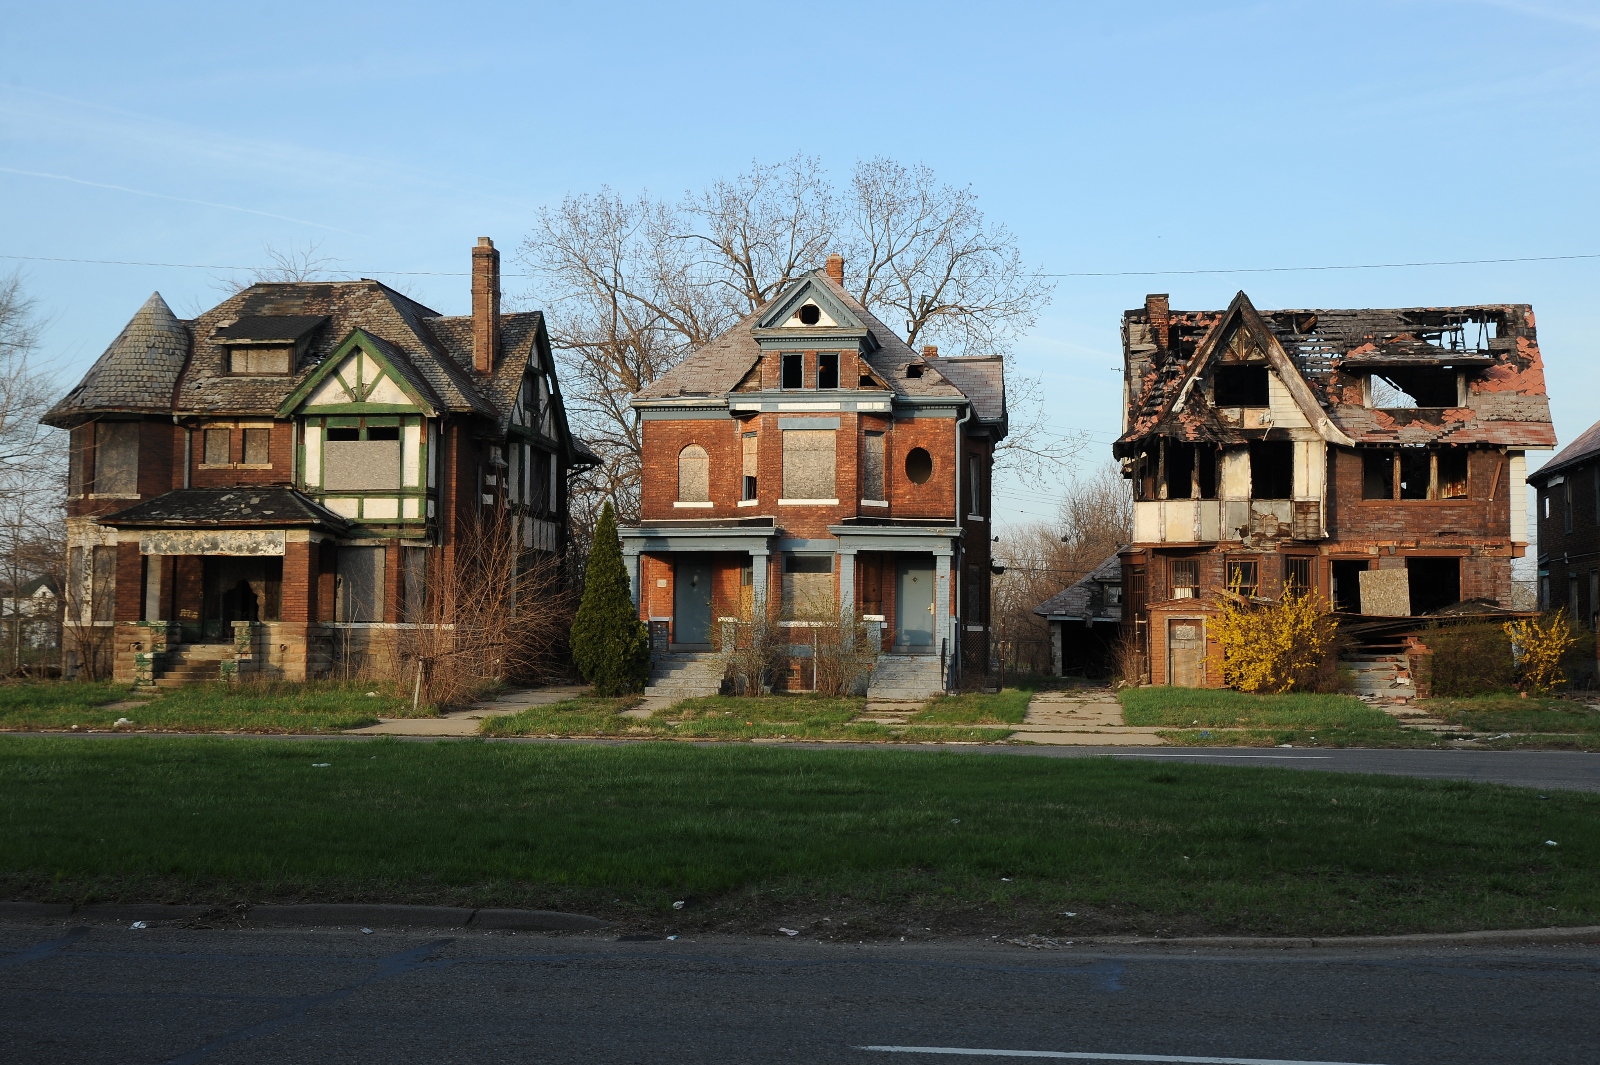 Abandoned housing stock in Detroit